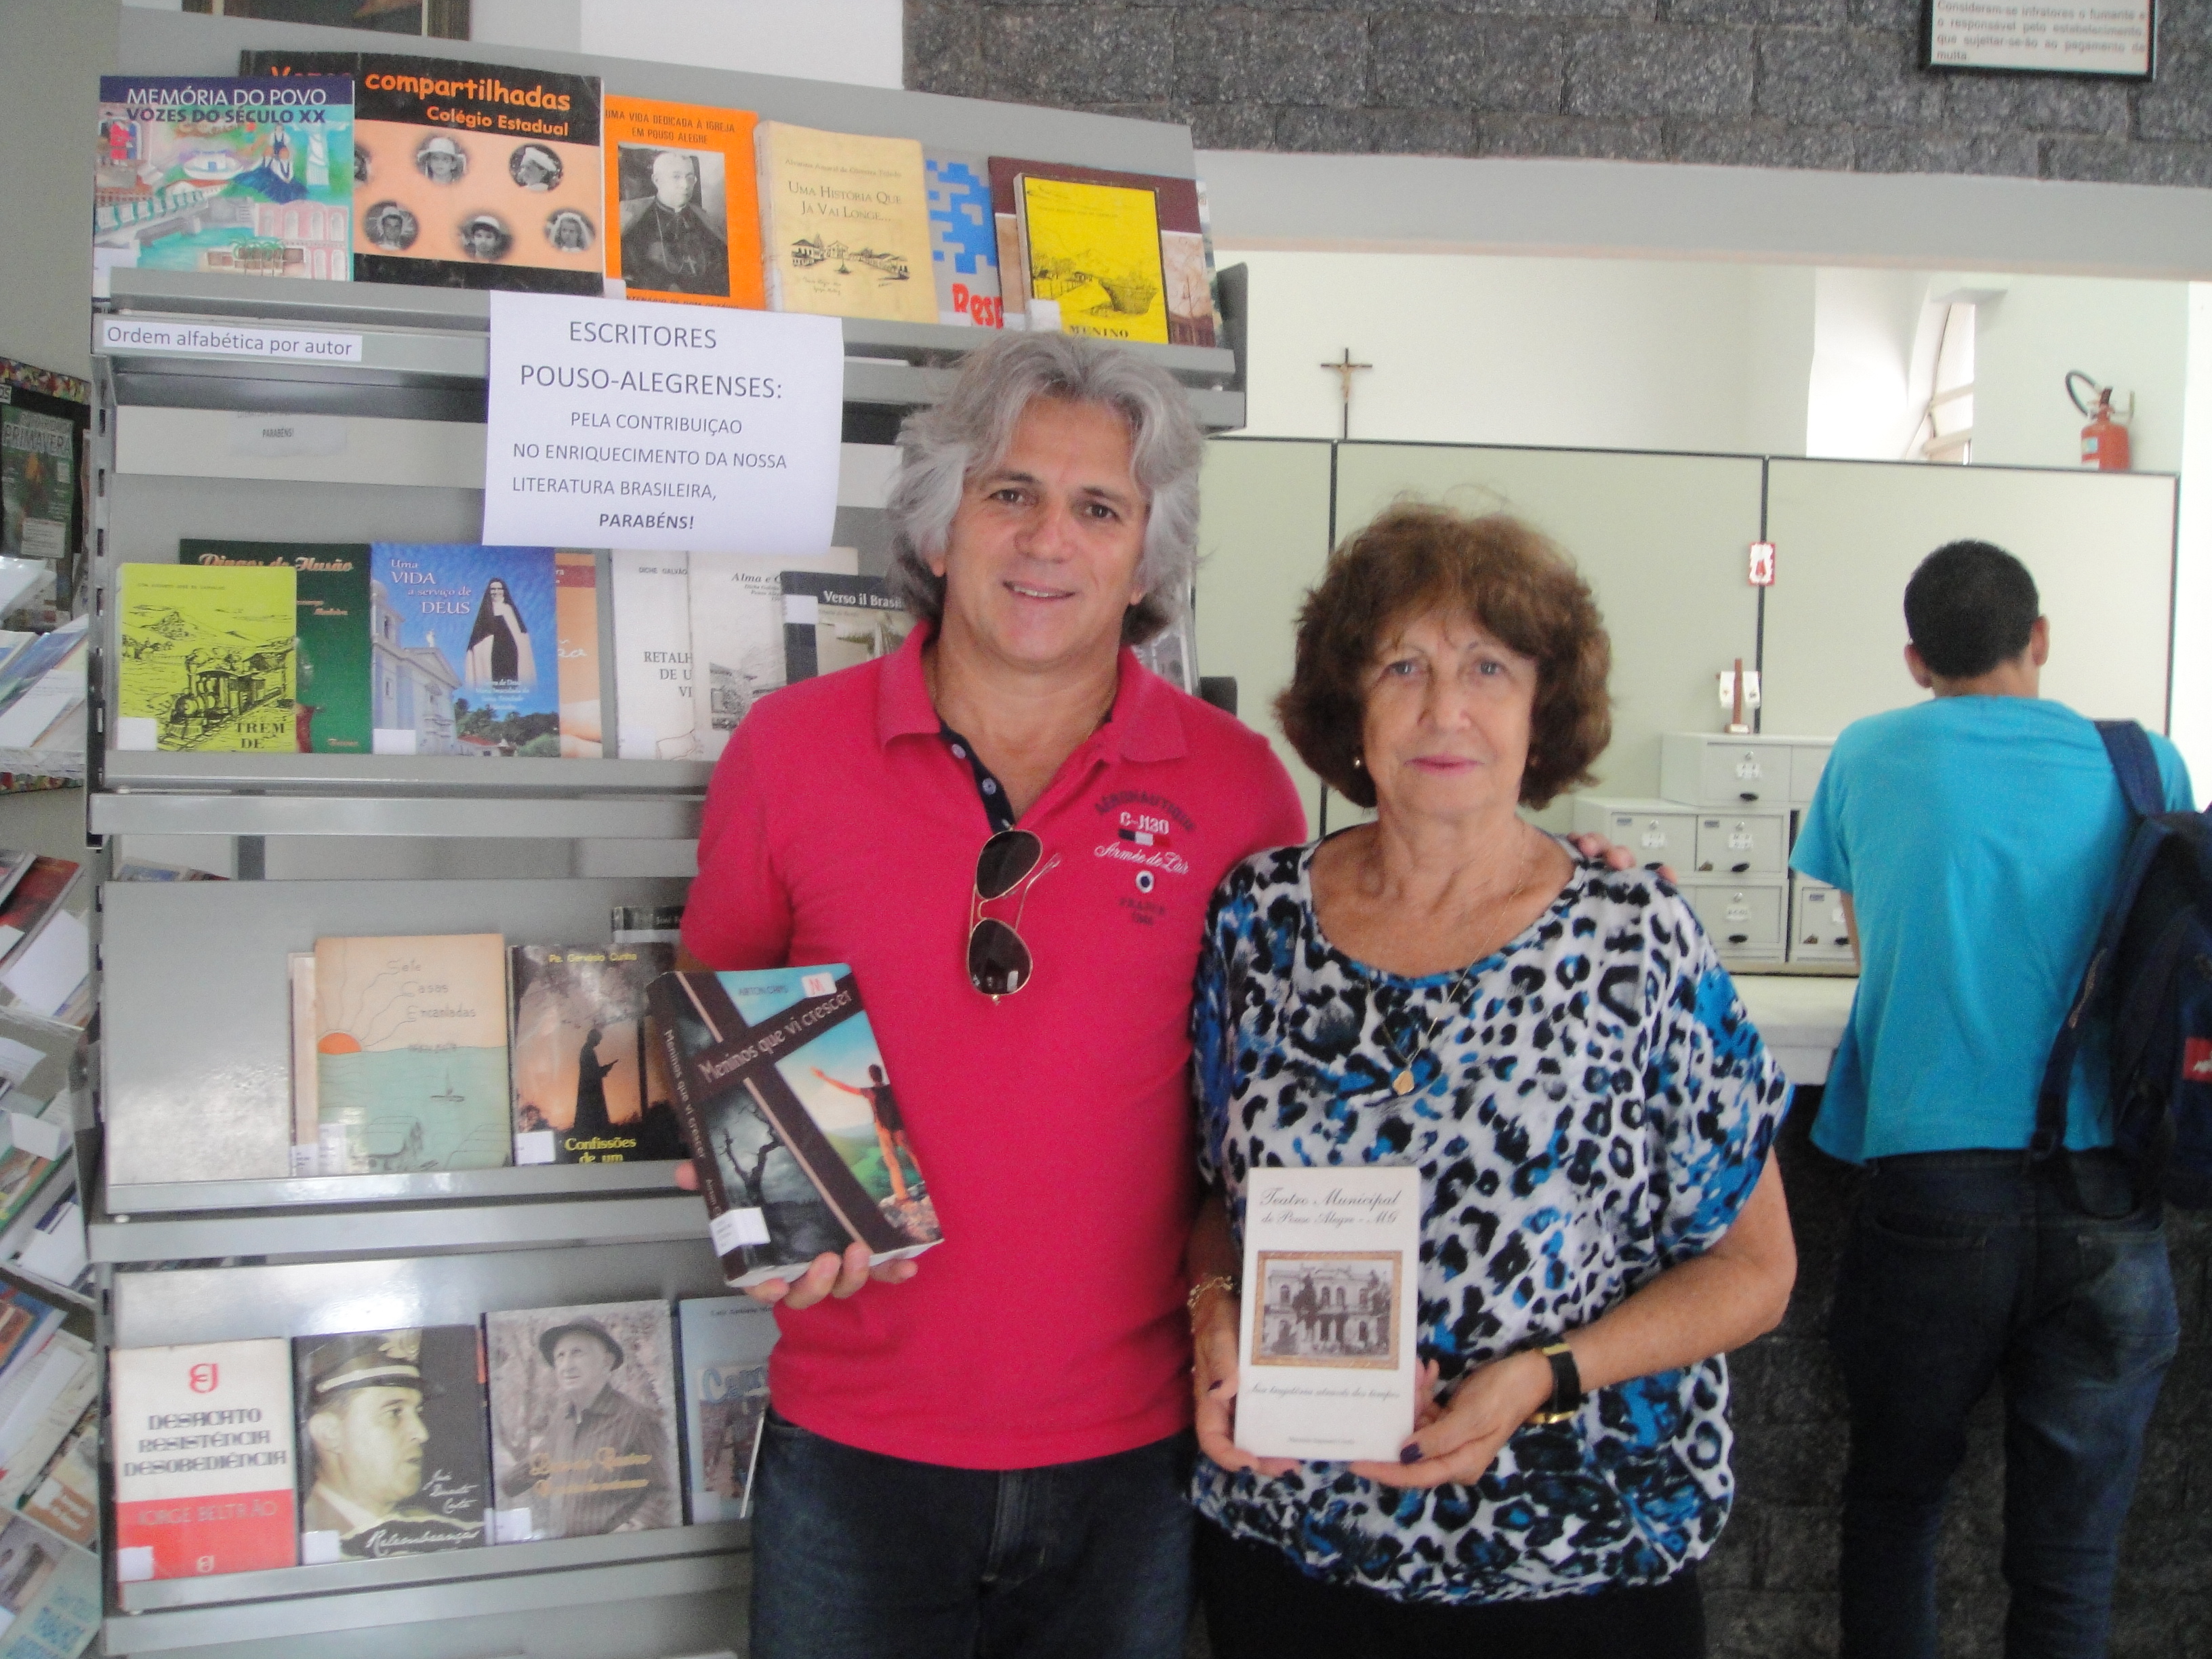 Airton Chips e seu "Meninos..." e Maristela Saponara Correa, Secretaria da Academia Pousoalegrense de Letras e autora do livro "Teatro Municipal de Pouso Alegre".